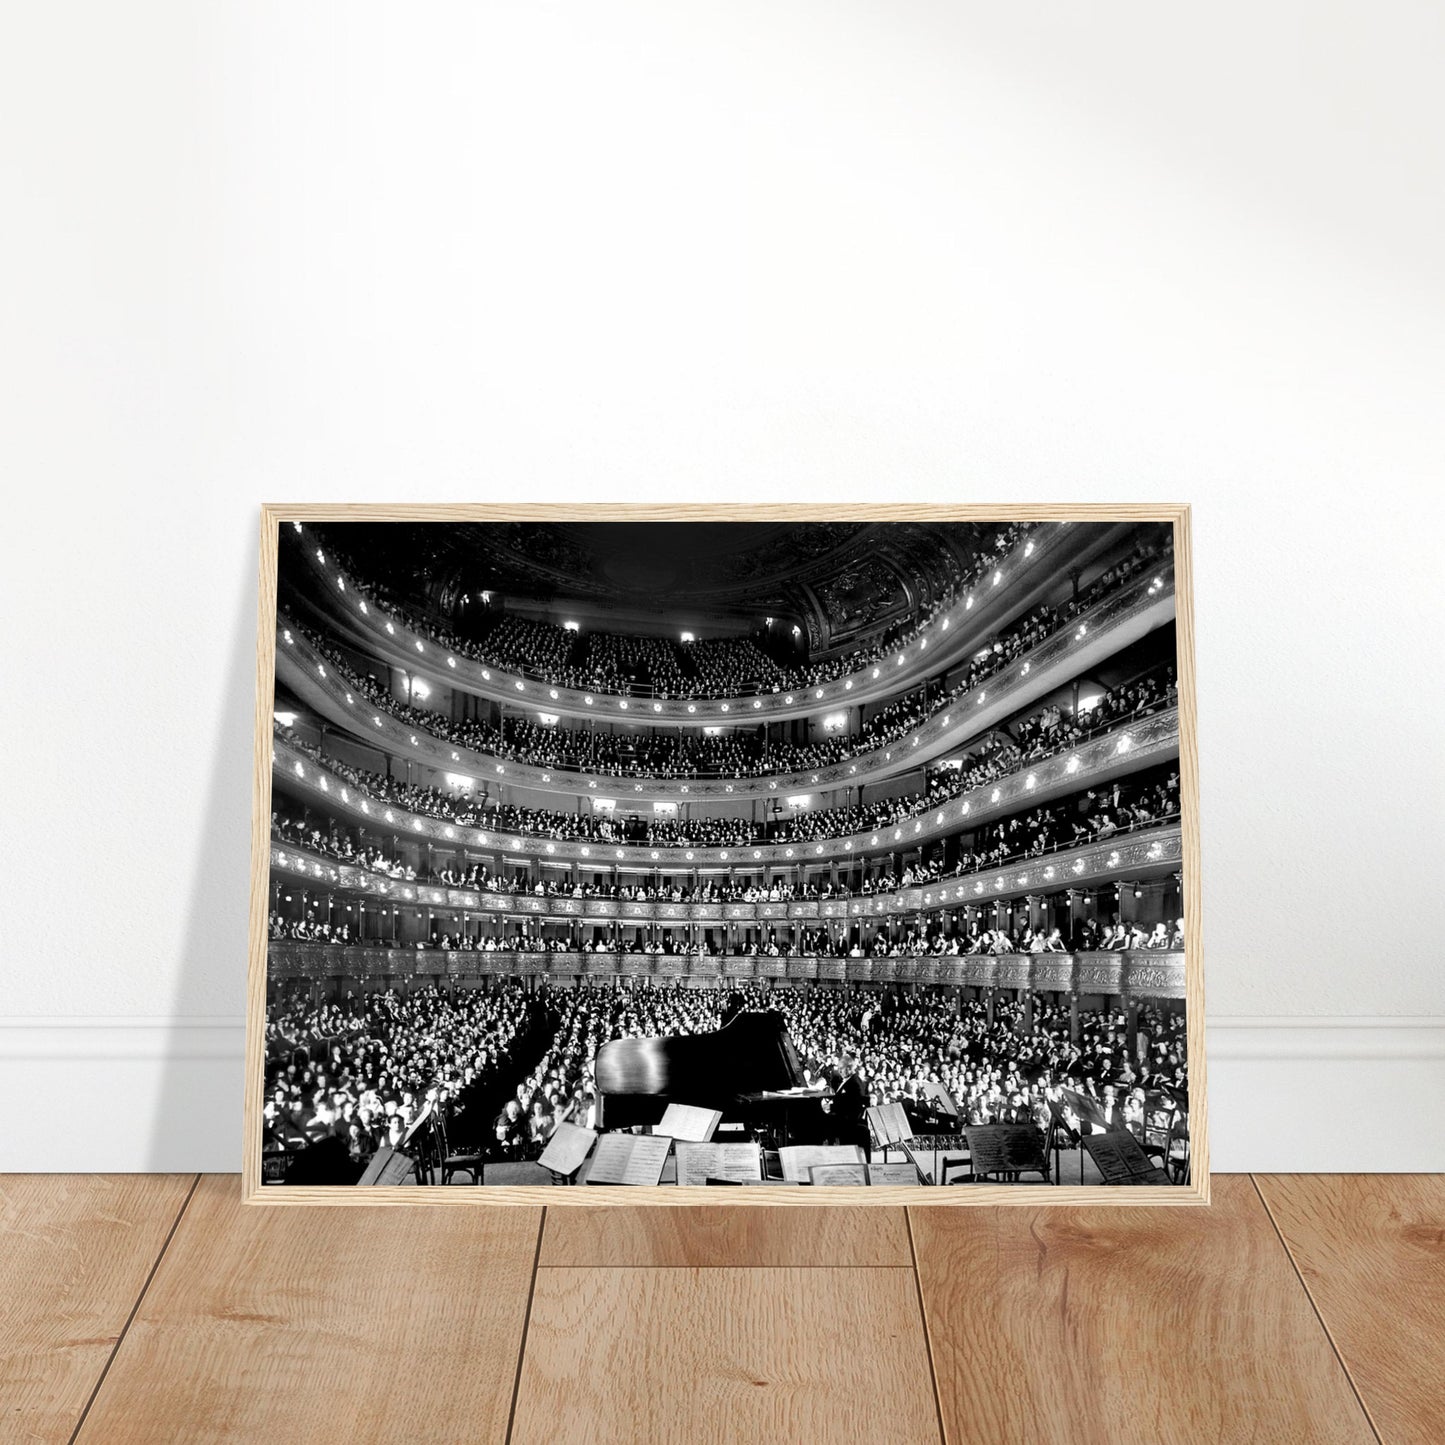 The Former Metropolitan Opera House (39th St) New York City, Piano Concert by Josef Hofmann - Posterify